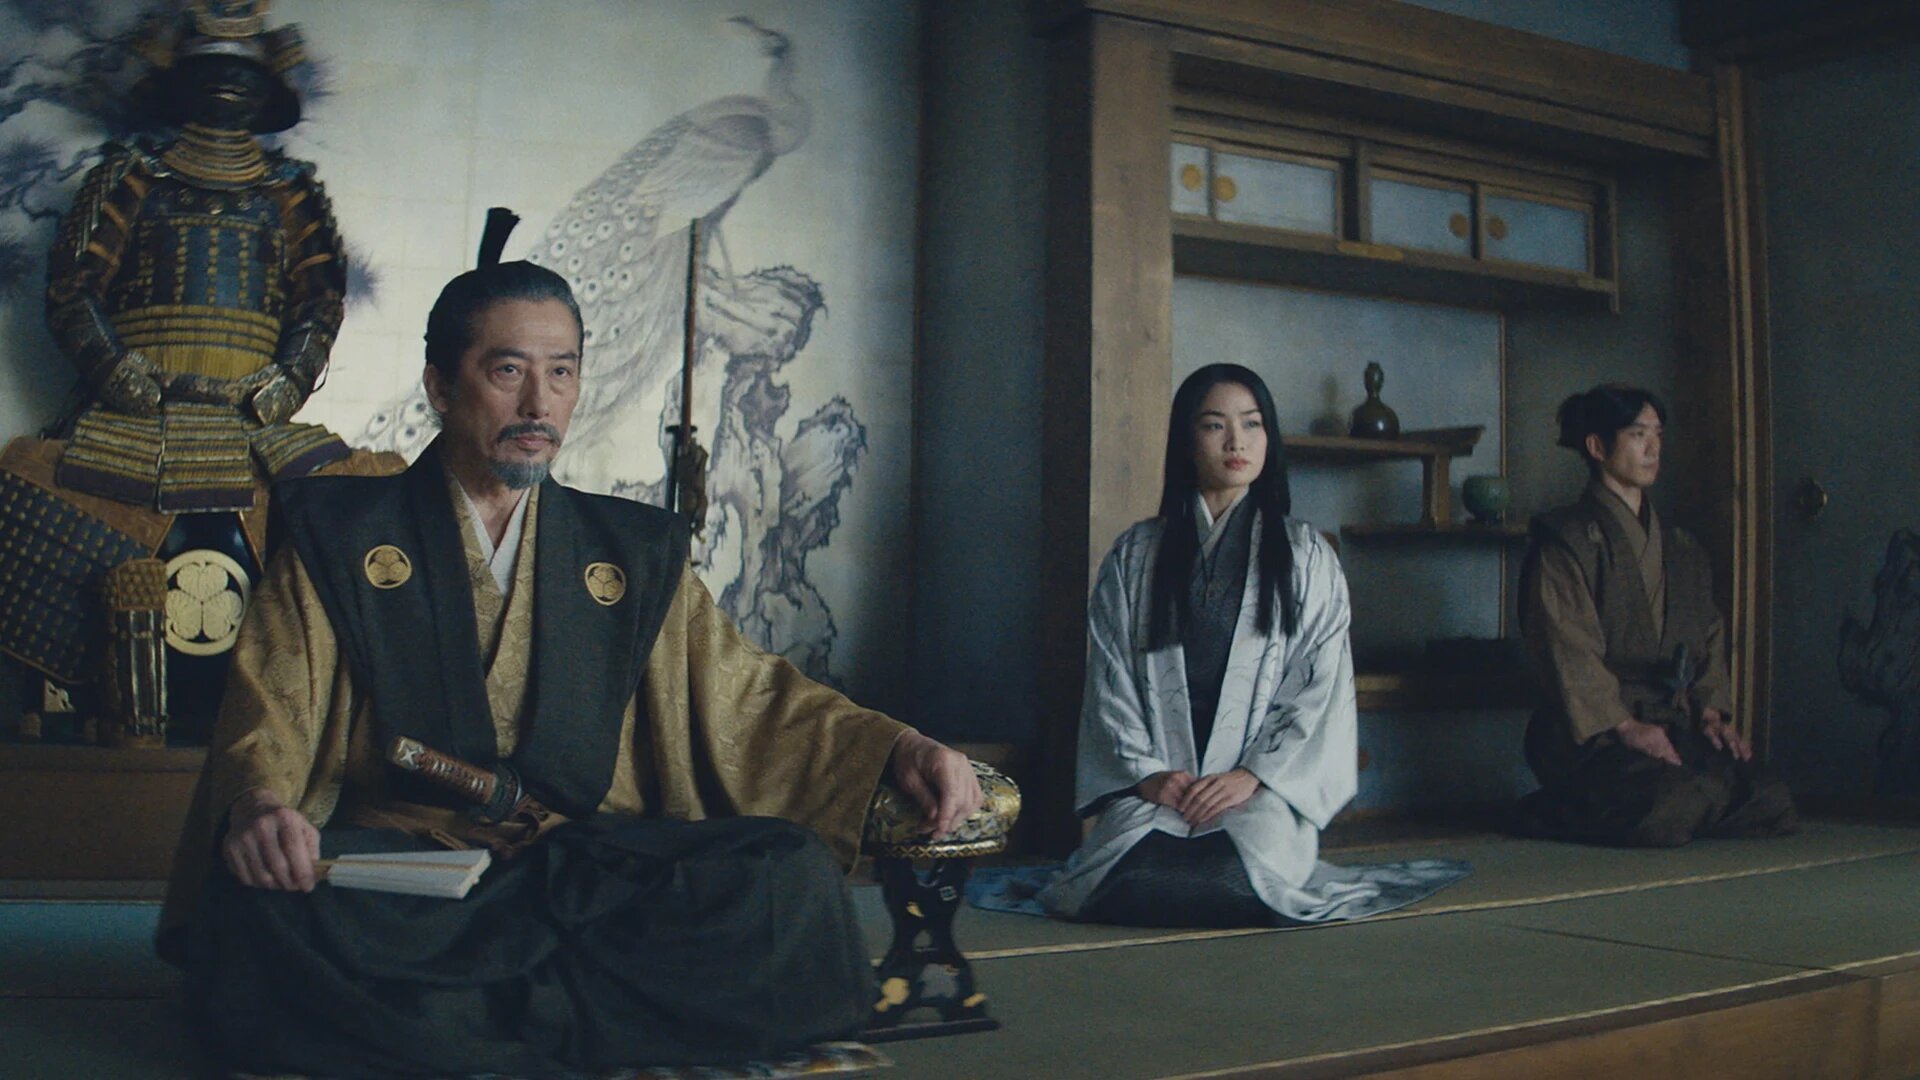 Shogun Episode 4 Release Date